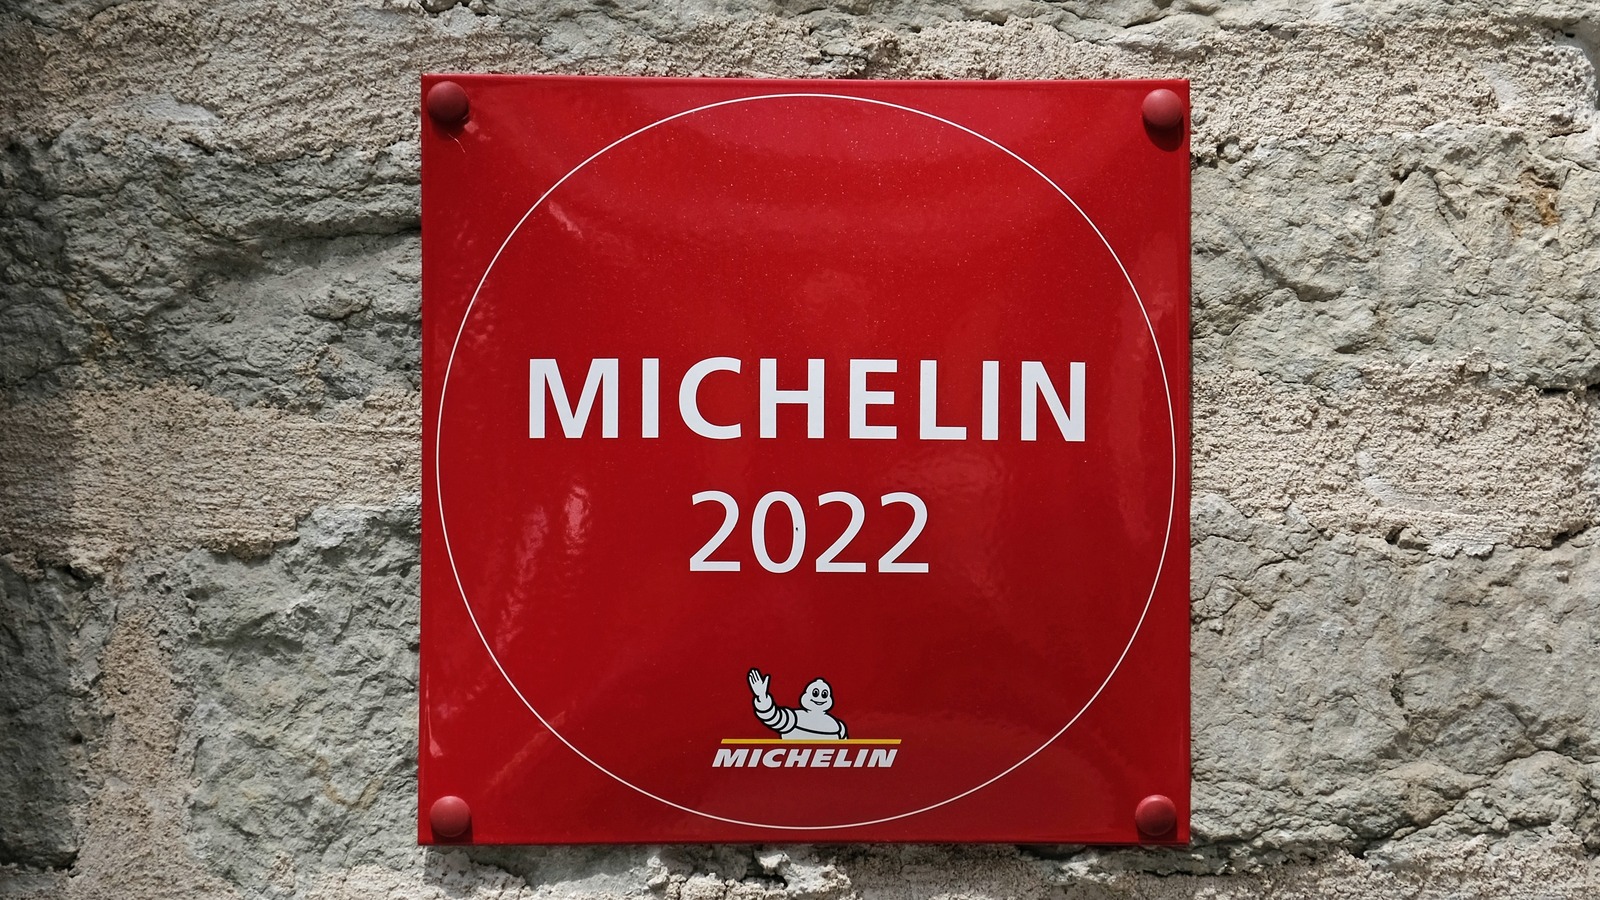 New Michelin Awards 18 Stars To California Restaurants